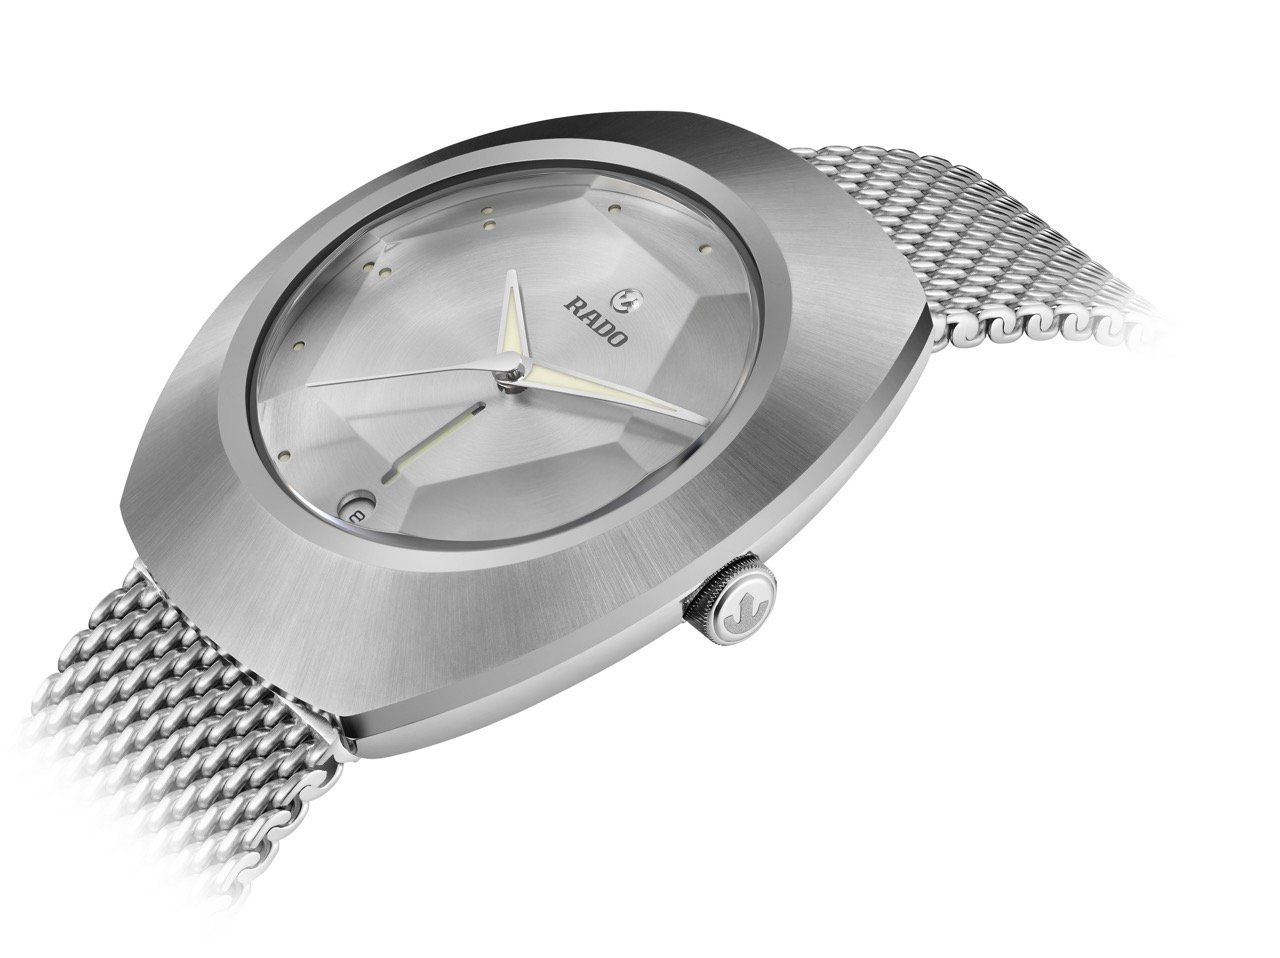 The timelessly iconic shape of the Rado Diastar Original 60th Anniversary watch